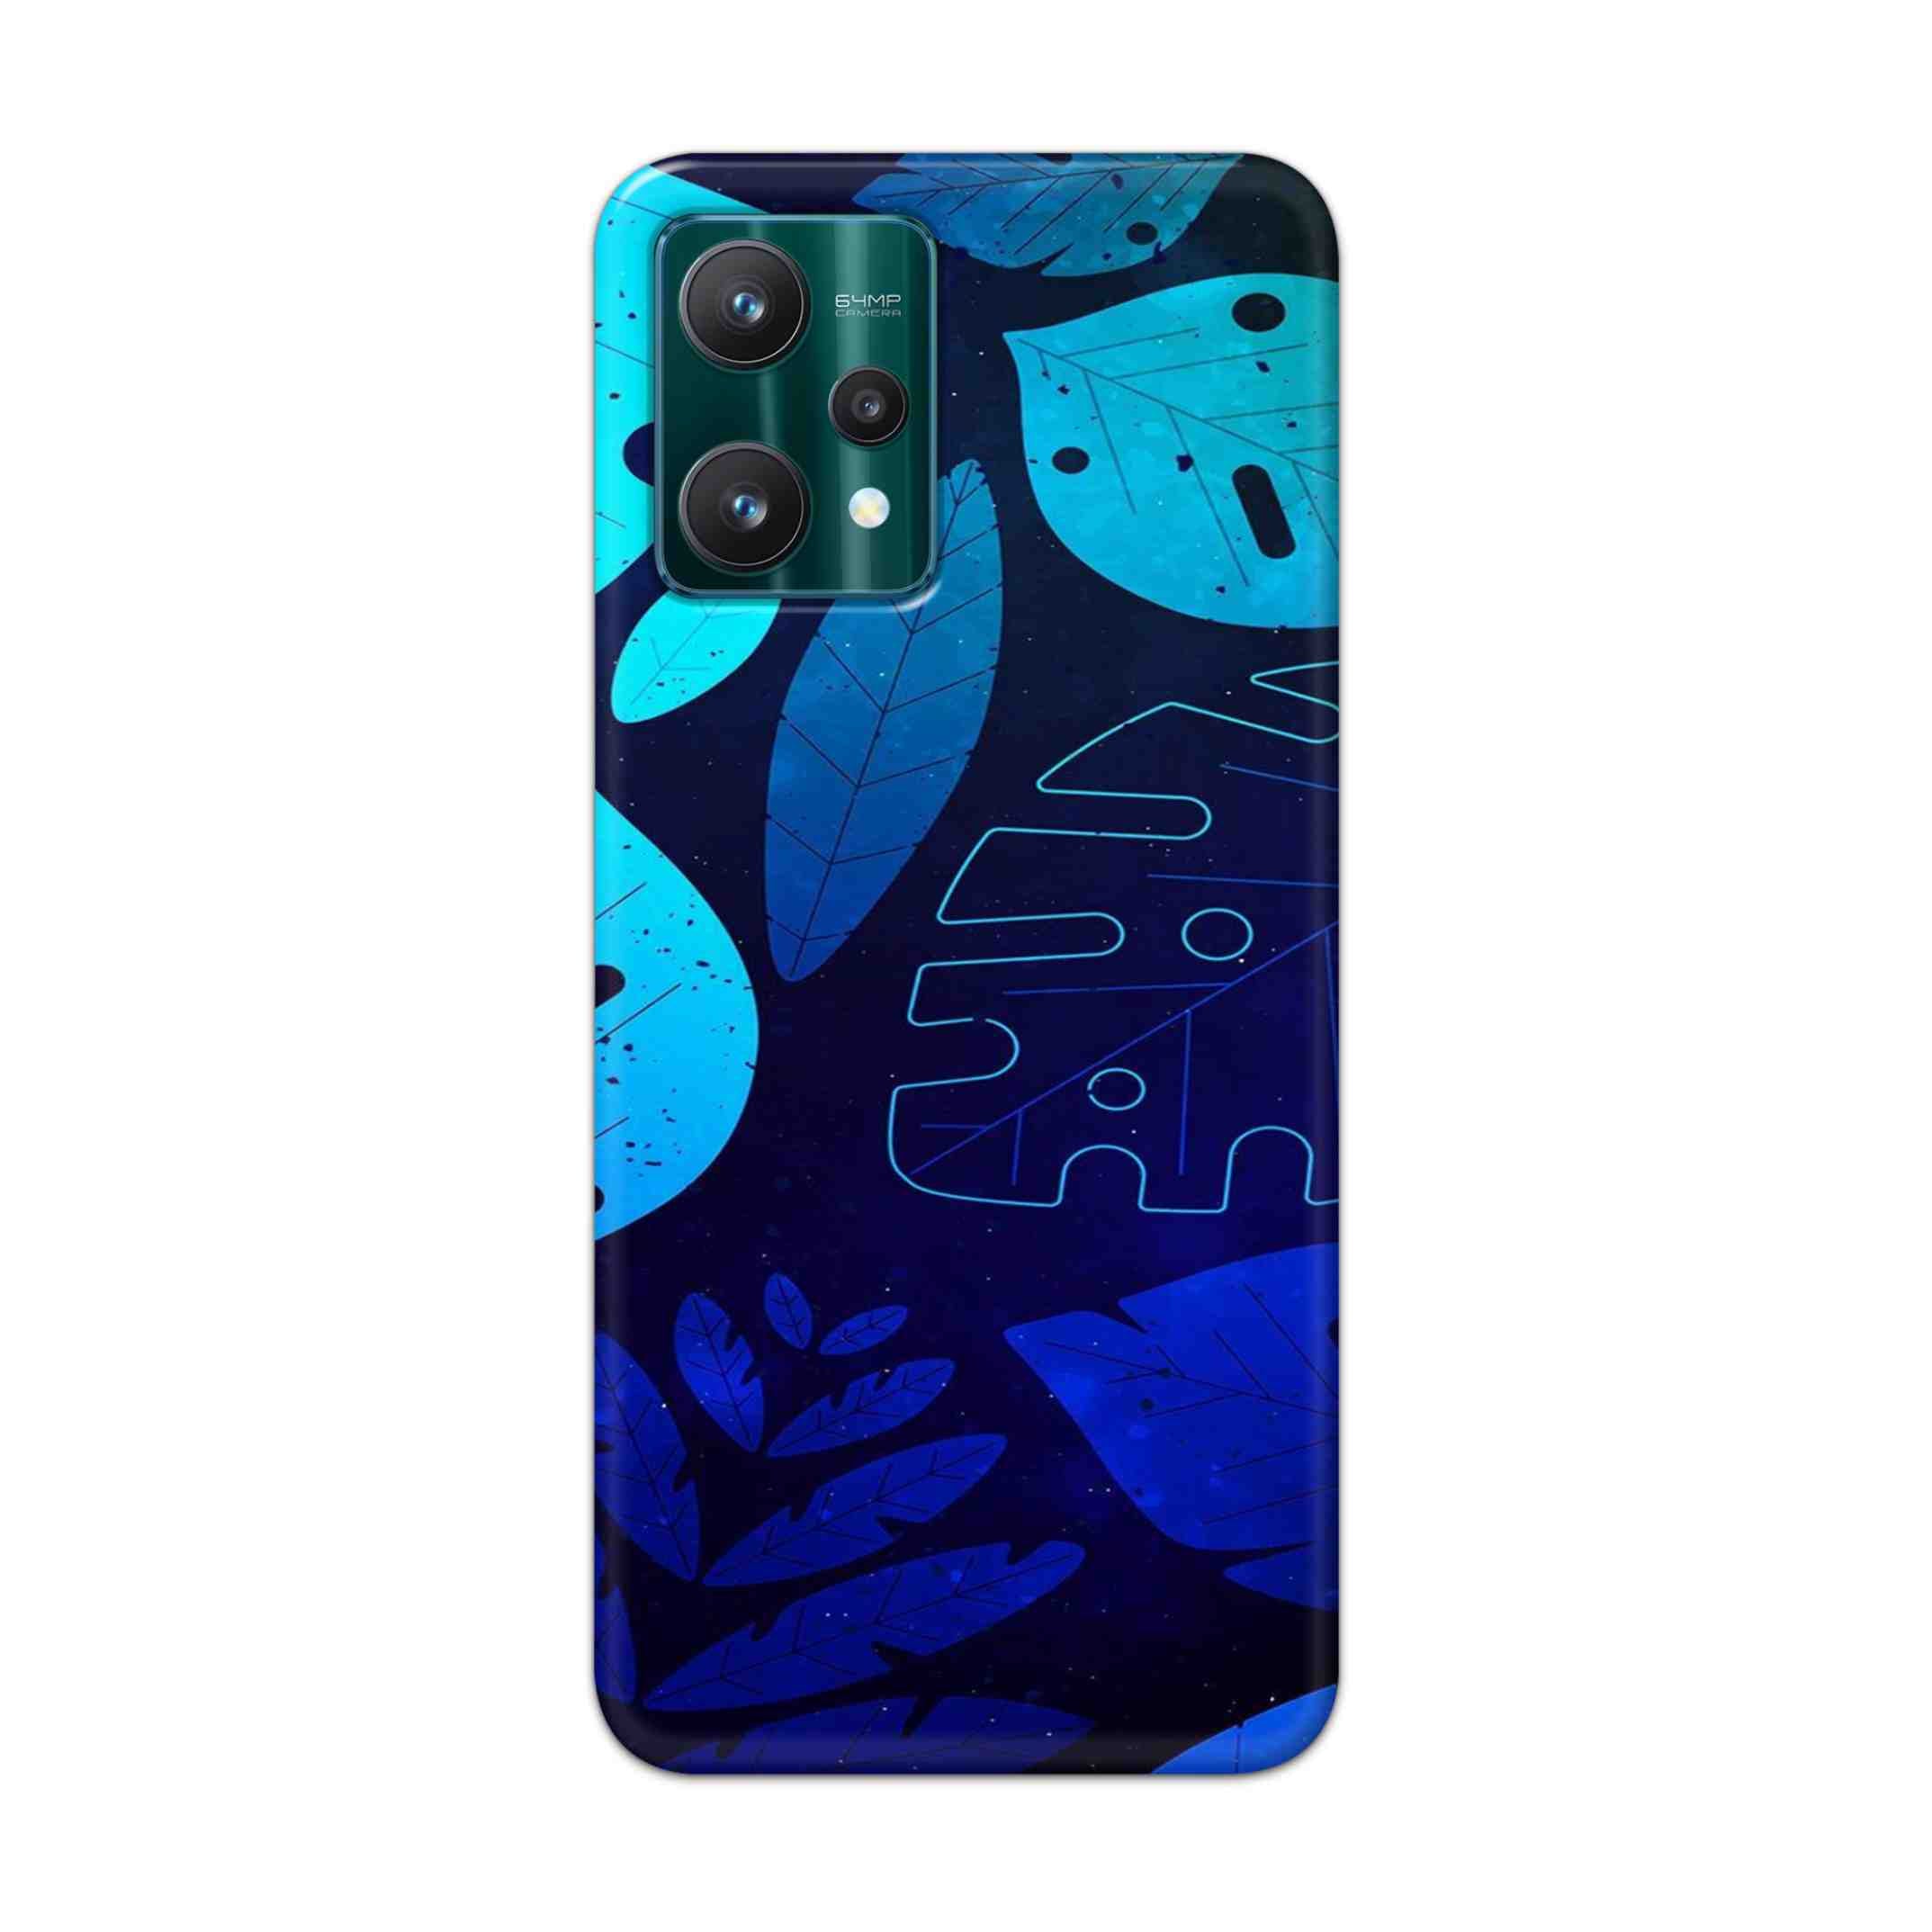 Buy Neon Leaf Hard Back Mobile Phone Case Cover For Realme 9 Pro Online